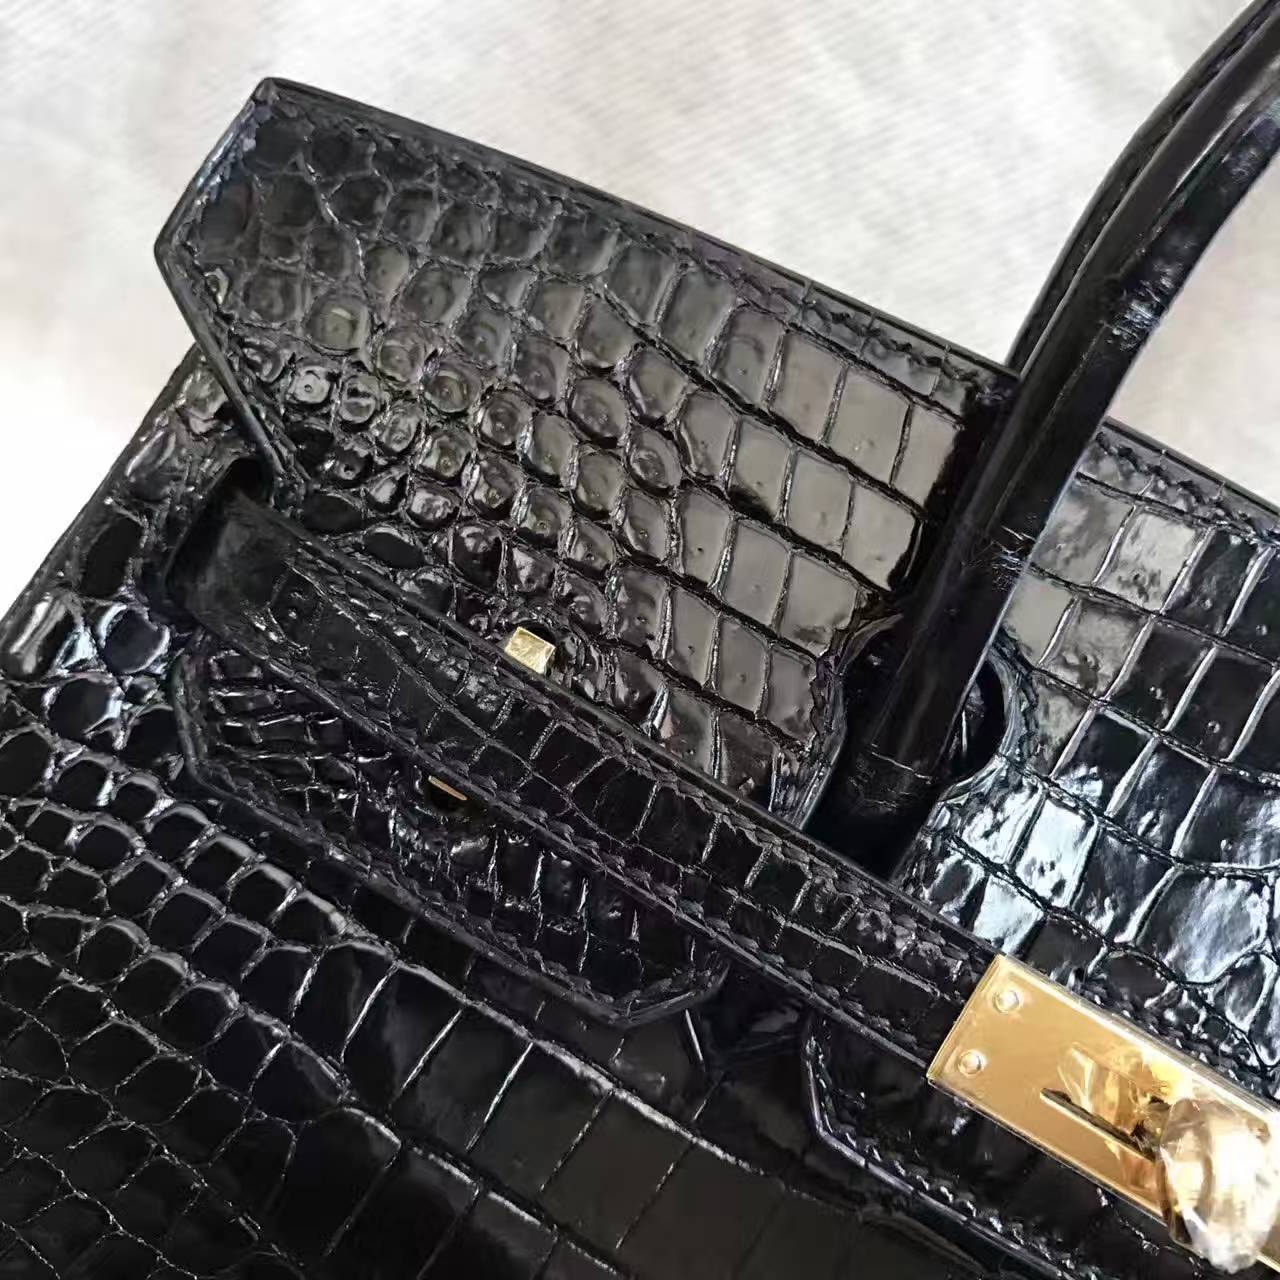 Wholesale Hermes Birkin Bag 25cm in CK89 Black Crocodile Shiny Leather